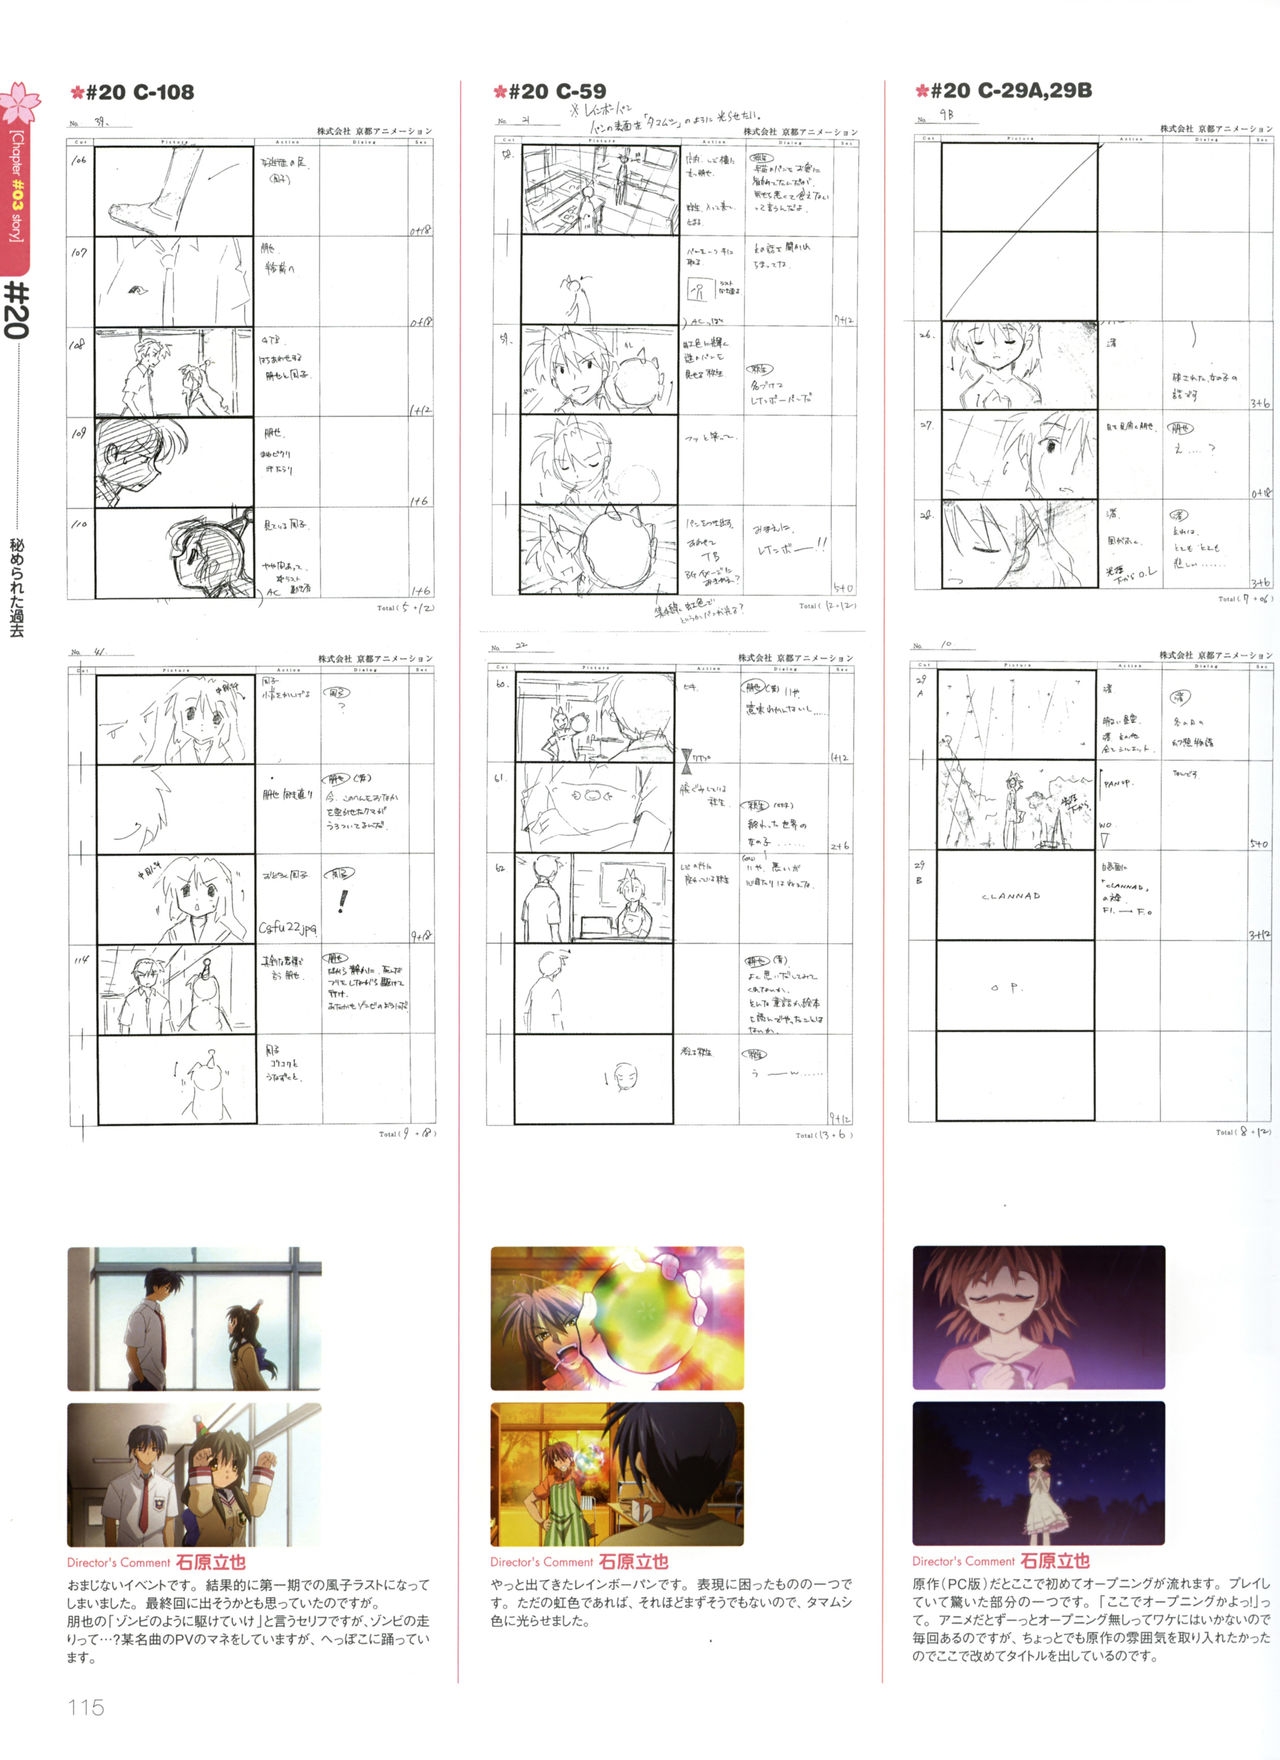 Clannad TV Animation Visual Fan Book 118